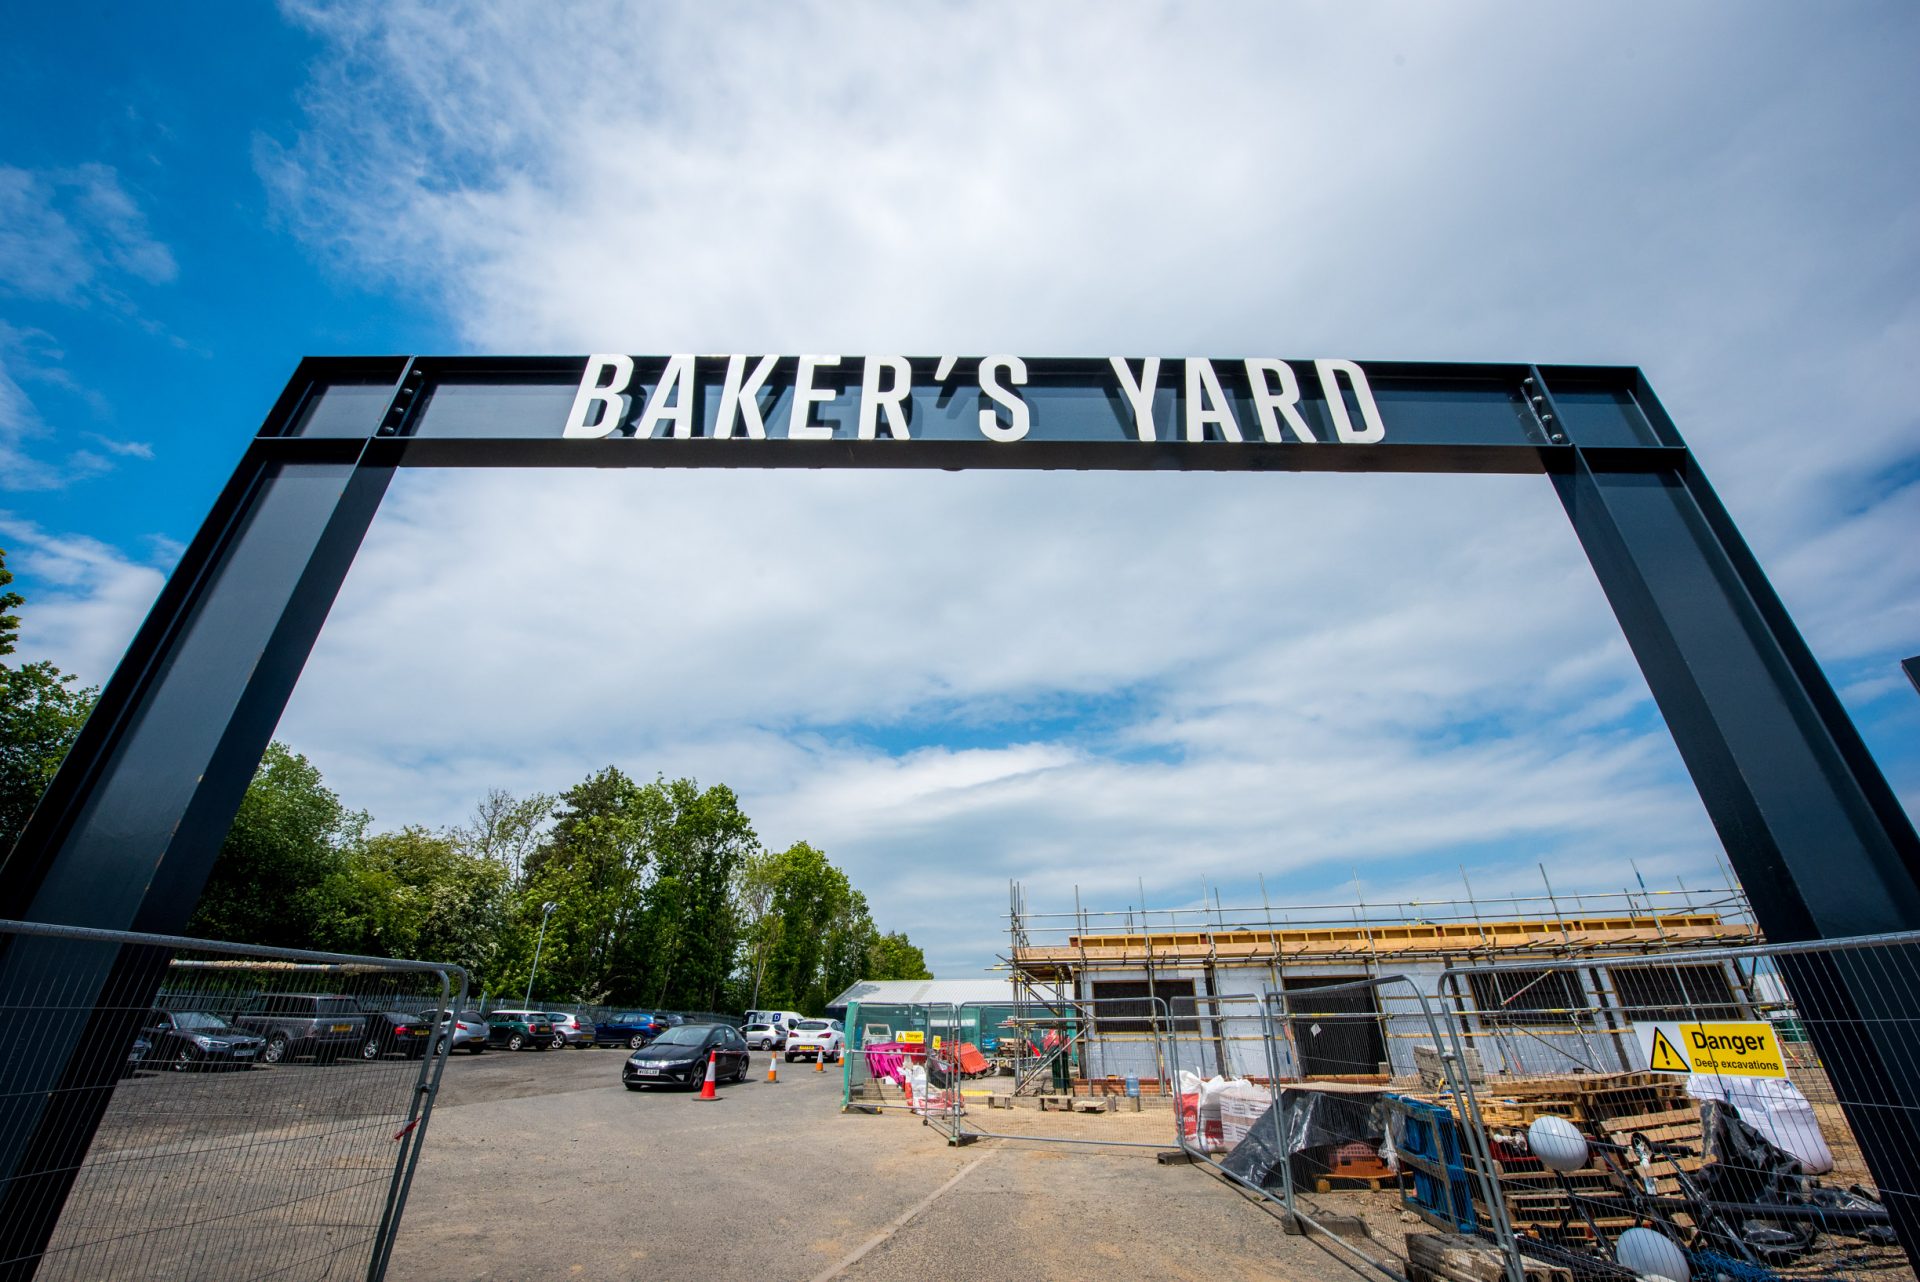 Baker’s Yard